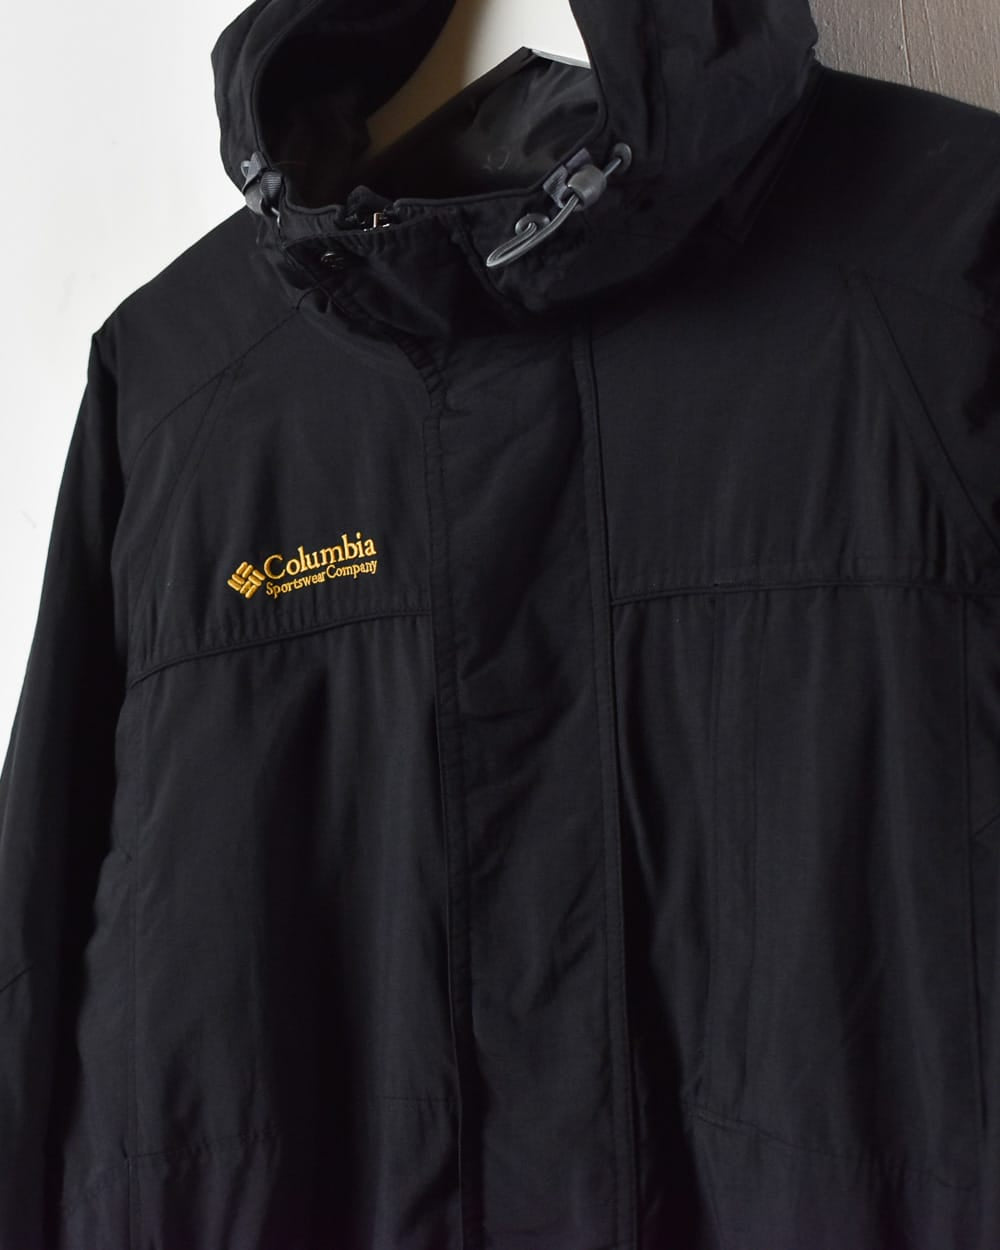 Black Columbia Fleece Lined Windbreaker Jacket - Medium